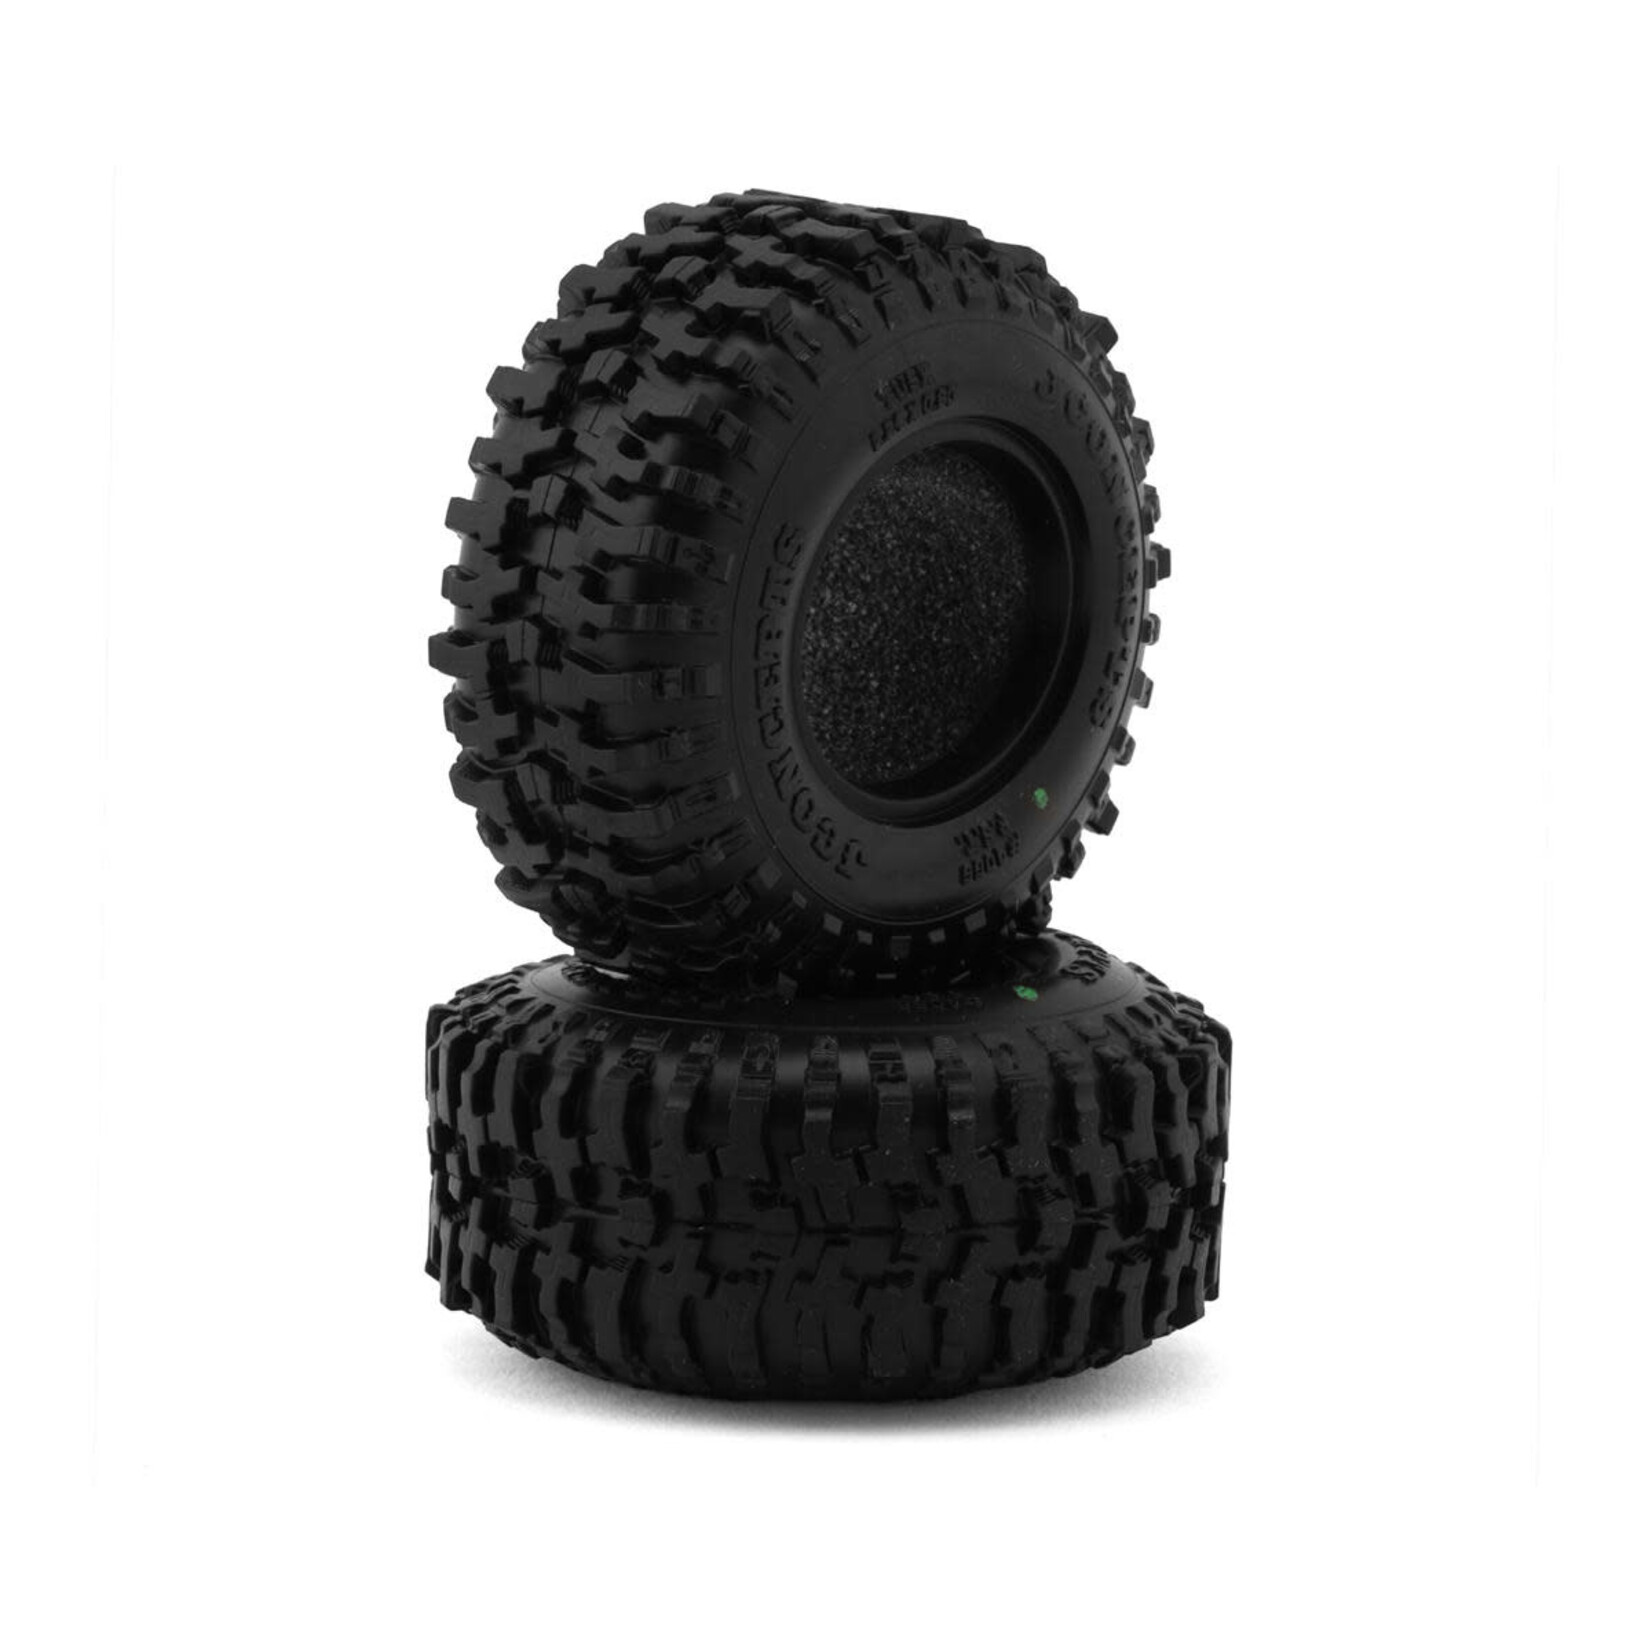 JConcepts JConcepts Tusk 1.0" All Terrain Crawler Tires (2) (2.25”) (TRX-4M) (Green) #4066-02